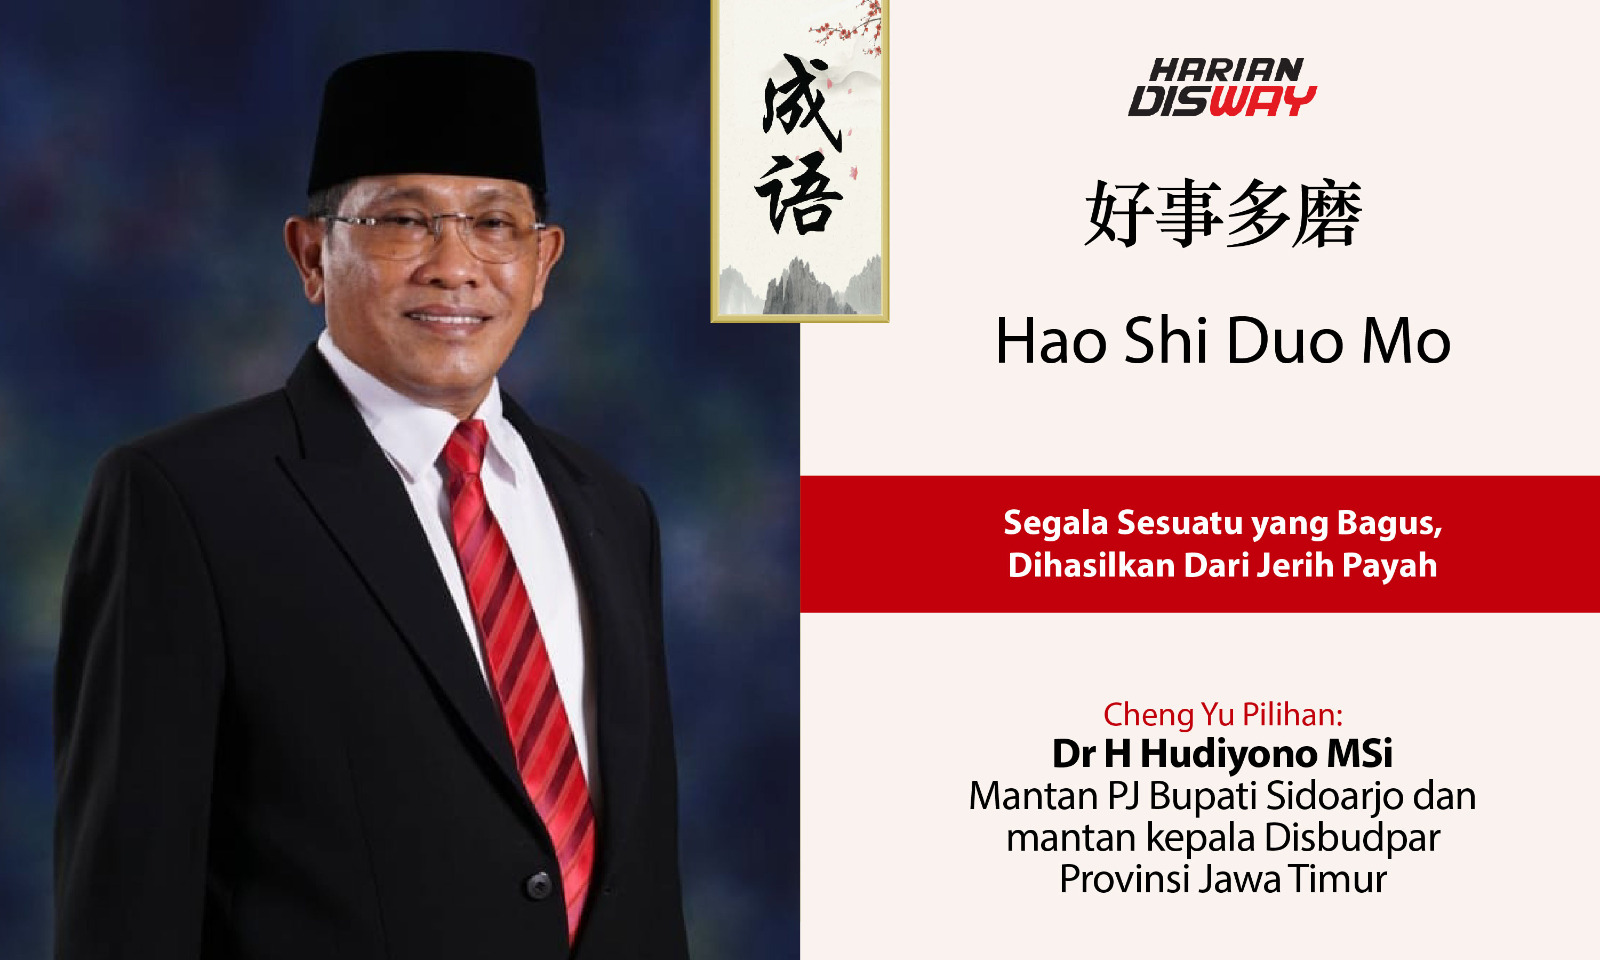 Cheng Yu Pilihan Mantan PJ Bupati Sidoarjo dan Mantan Kepala Disbudpar Jawa Timur Dr H Hudiyono MSi: Hao Shi Duo Mo